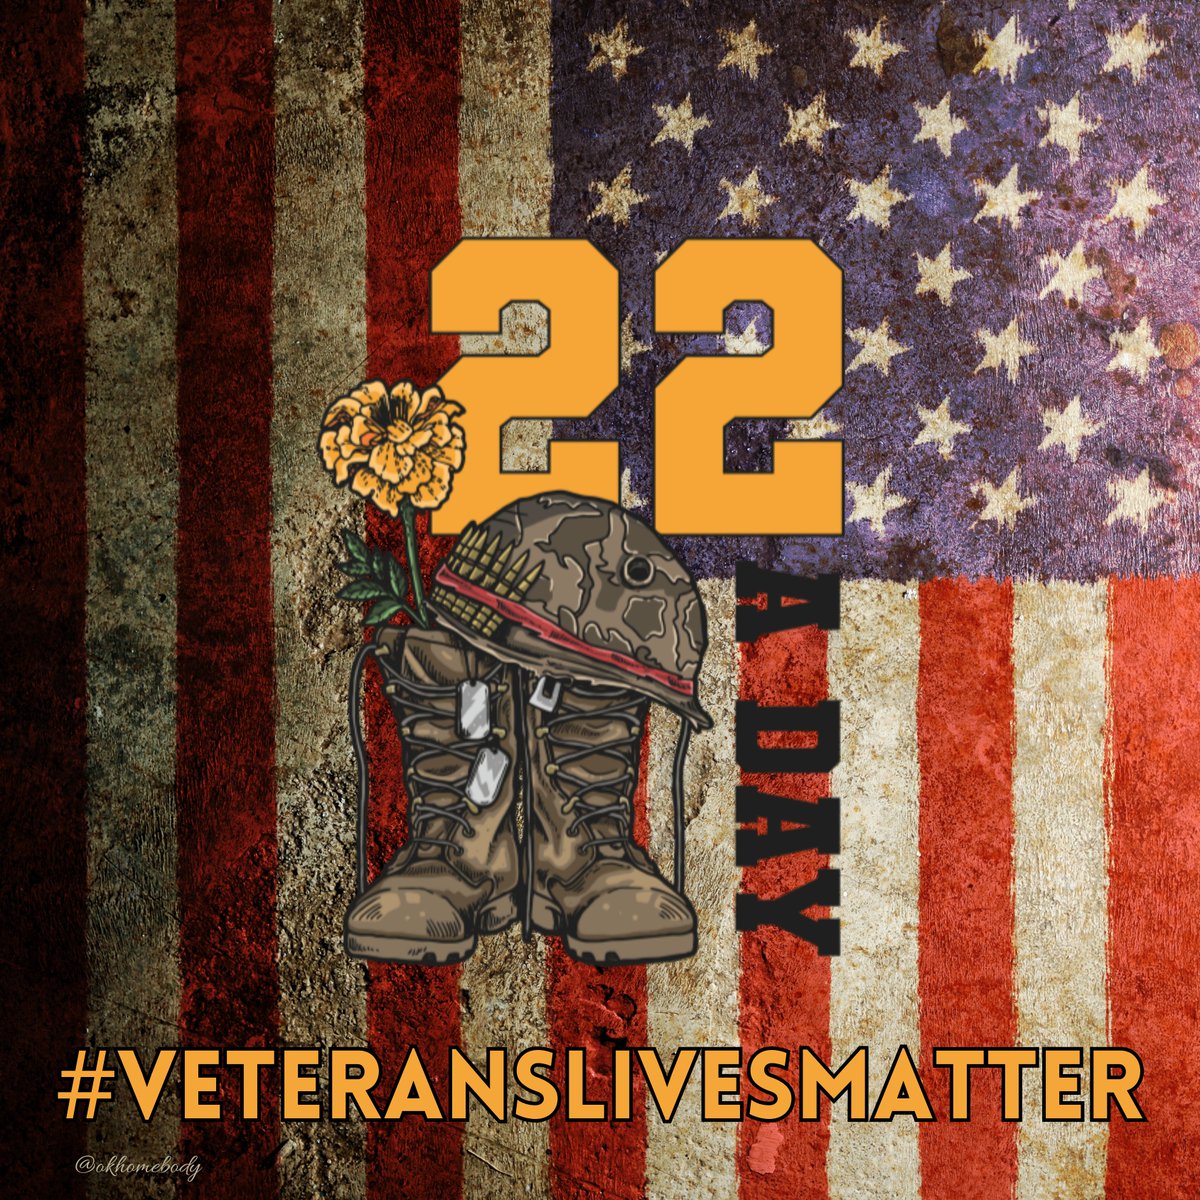 🇺🇸 #ThankfulThursday #Buddy✅with #Veterans 🙏RH
❤️#BuddyChecksMatter because #VeteransLivesMatter❤️
⭐️ 🇺🇸 Repost #EndVeteranSuicide #dial988press1 🇺🇸⭐️
🇺🇸 @mil_vet17 @acls9_9 @stvwht @mmoyak ⭐️
🇺🇸 @cesheldon1 @USAVet_5 @DPatrioticvet⭐️
🇺🇸 @CombatDoc4 @FawnMacMT @SRecupero1776⭐️…